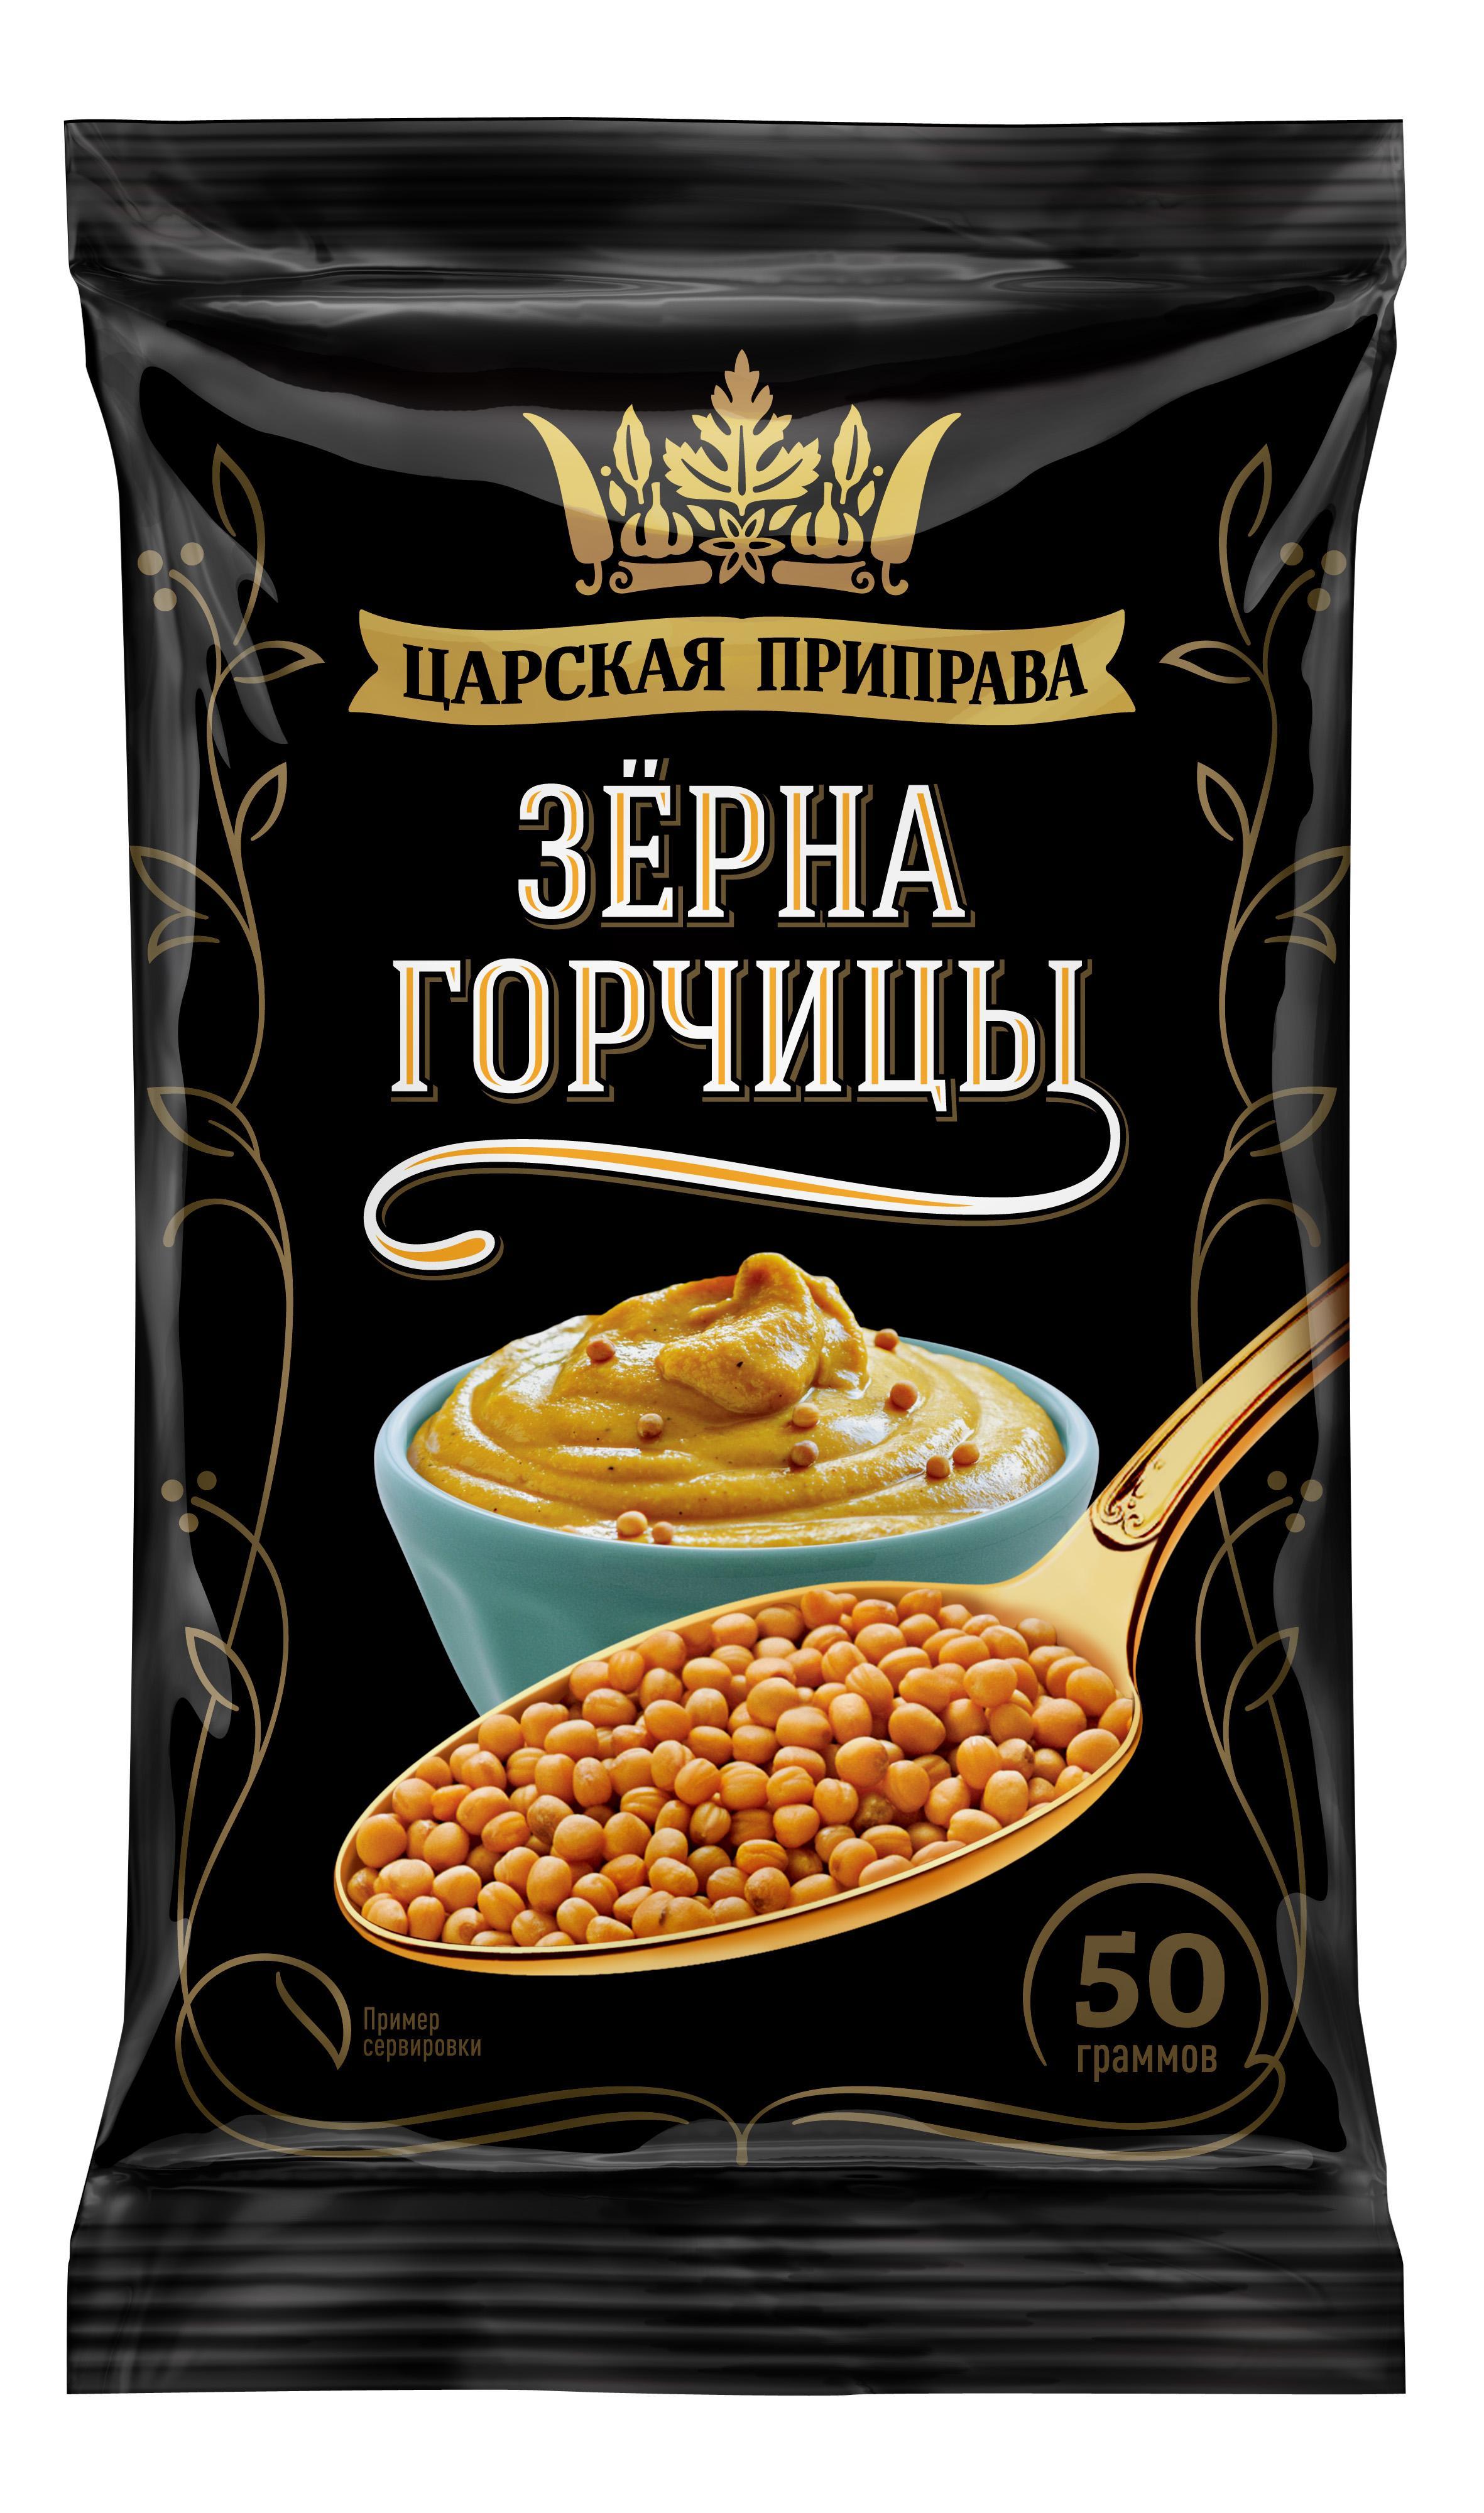 Приправа зерна горчицы, Царская Приправа, 50 гр., флоу-пак